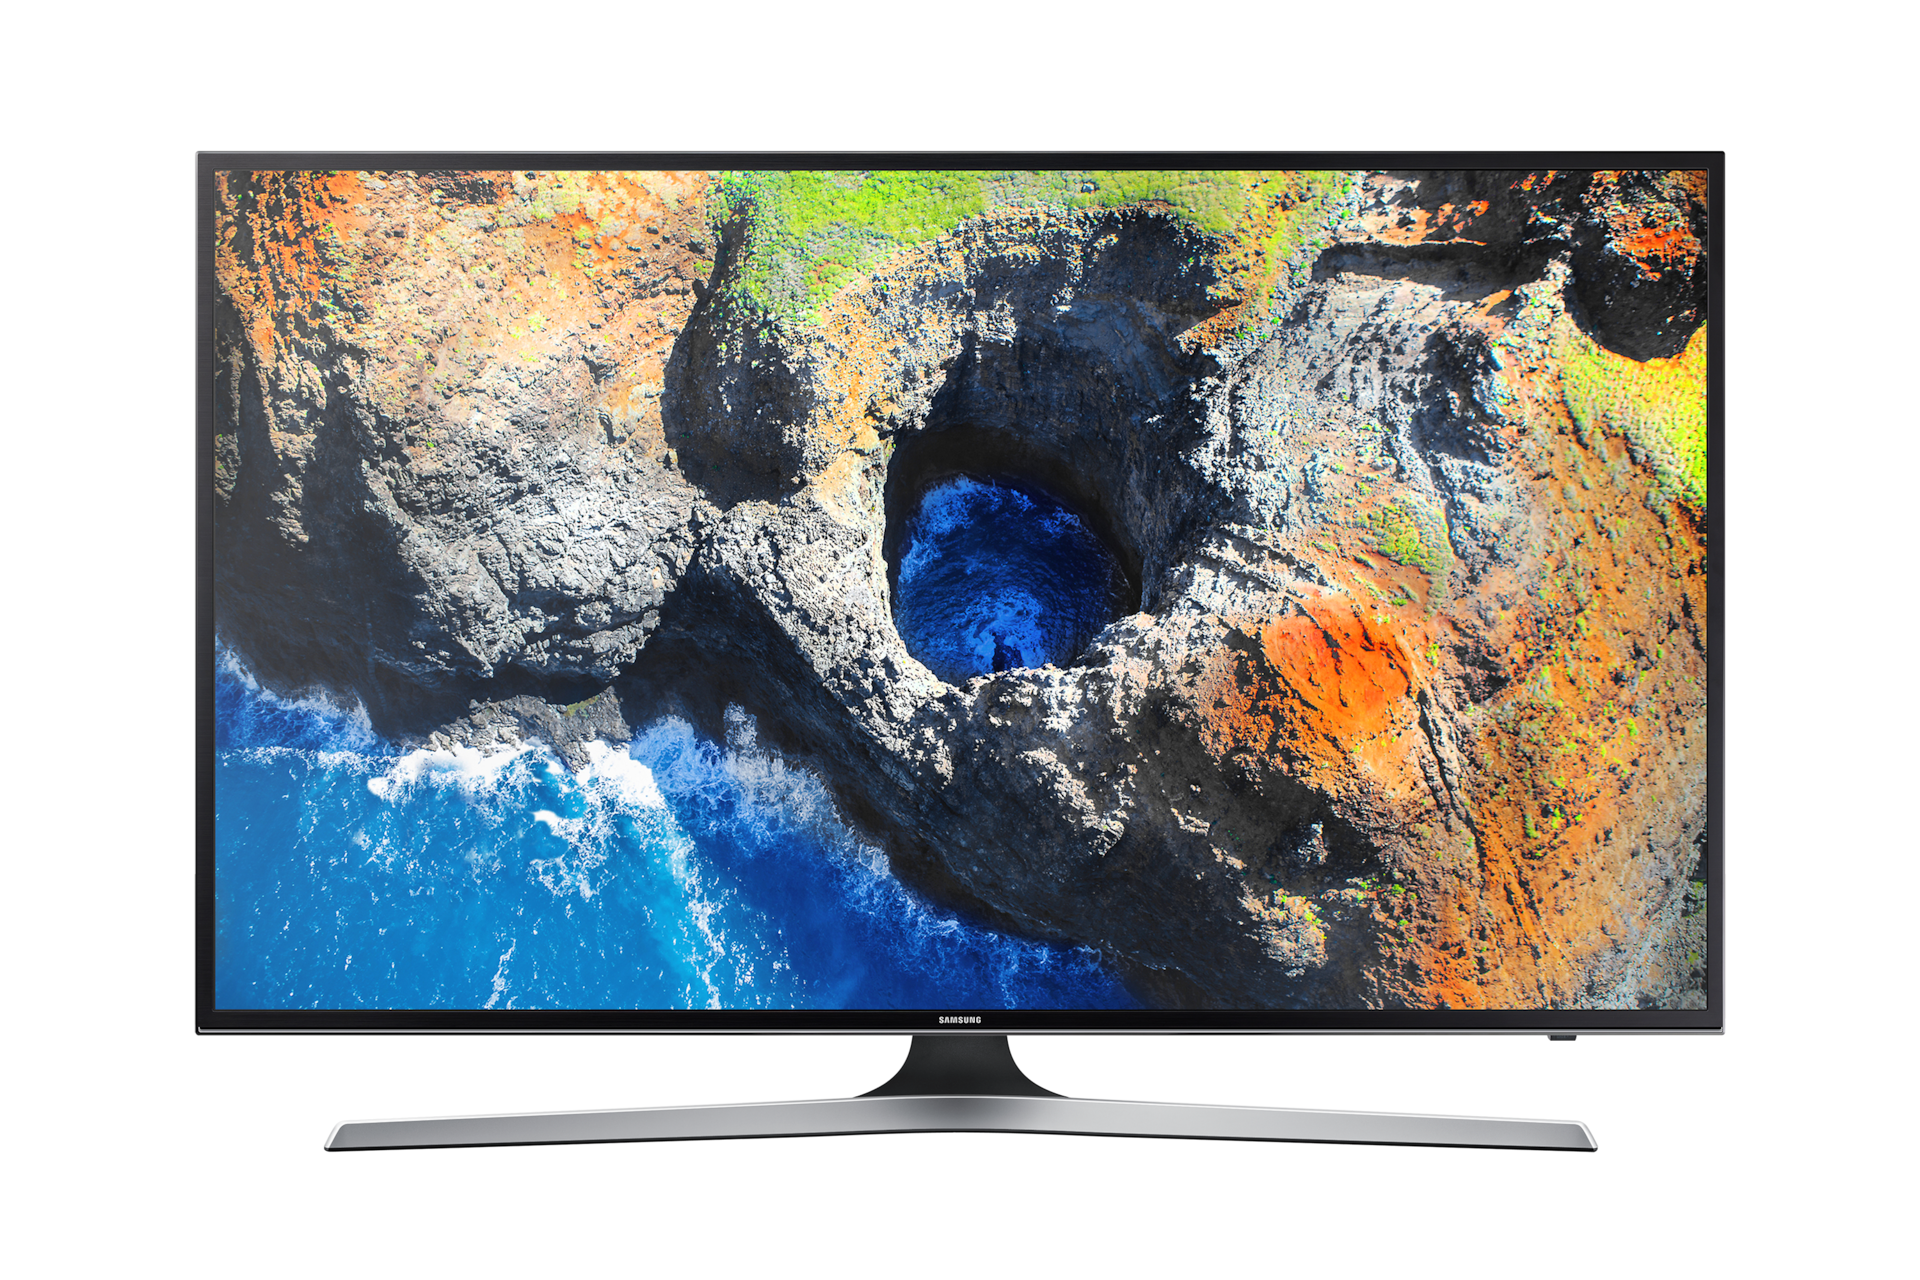 Ofertón: ahorra 1.300 euros en esta Smart TV 4K de gama alta de